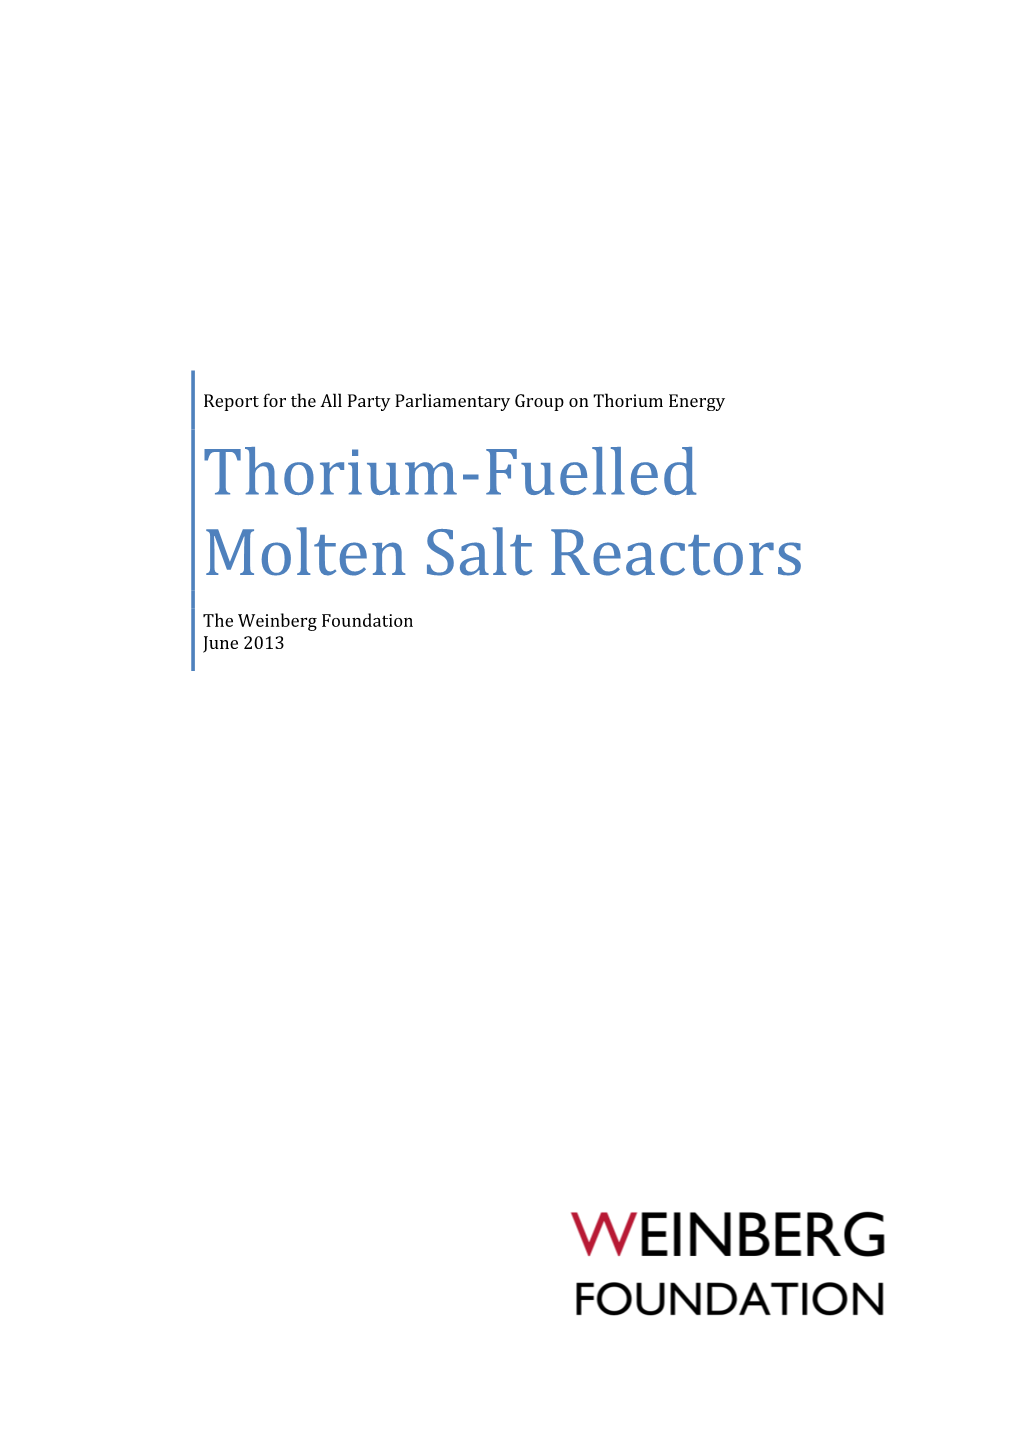 Thorium-Fuelled Molten Salt Reactors